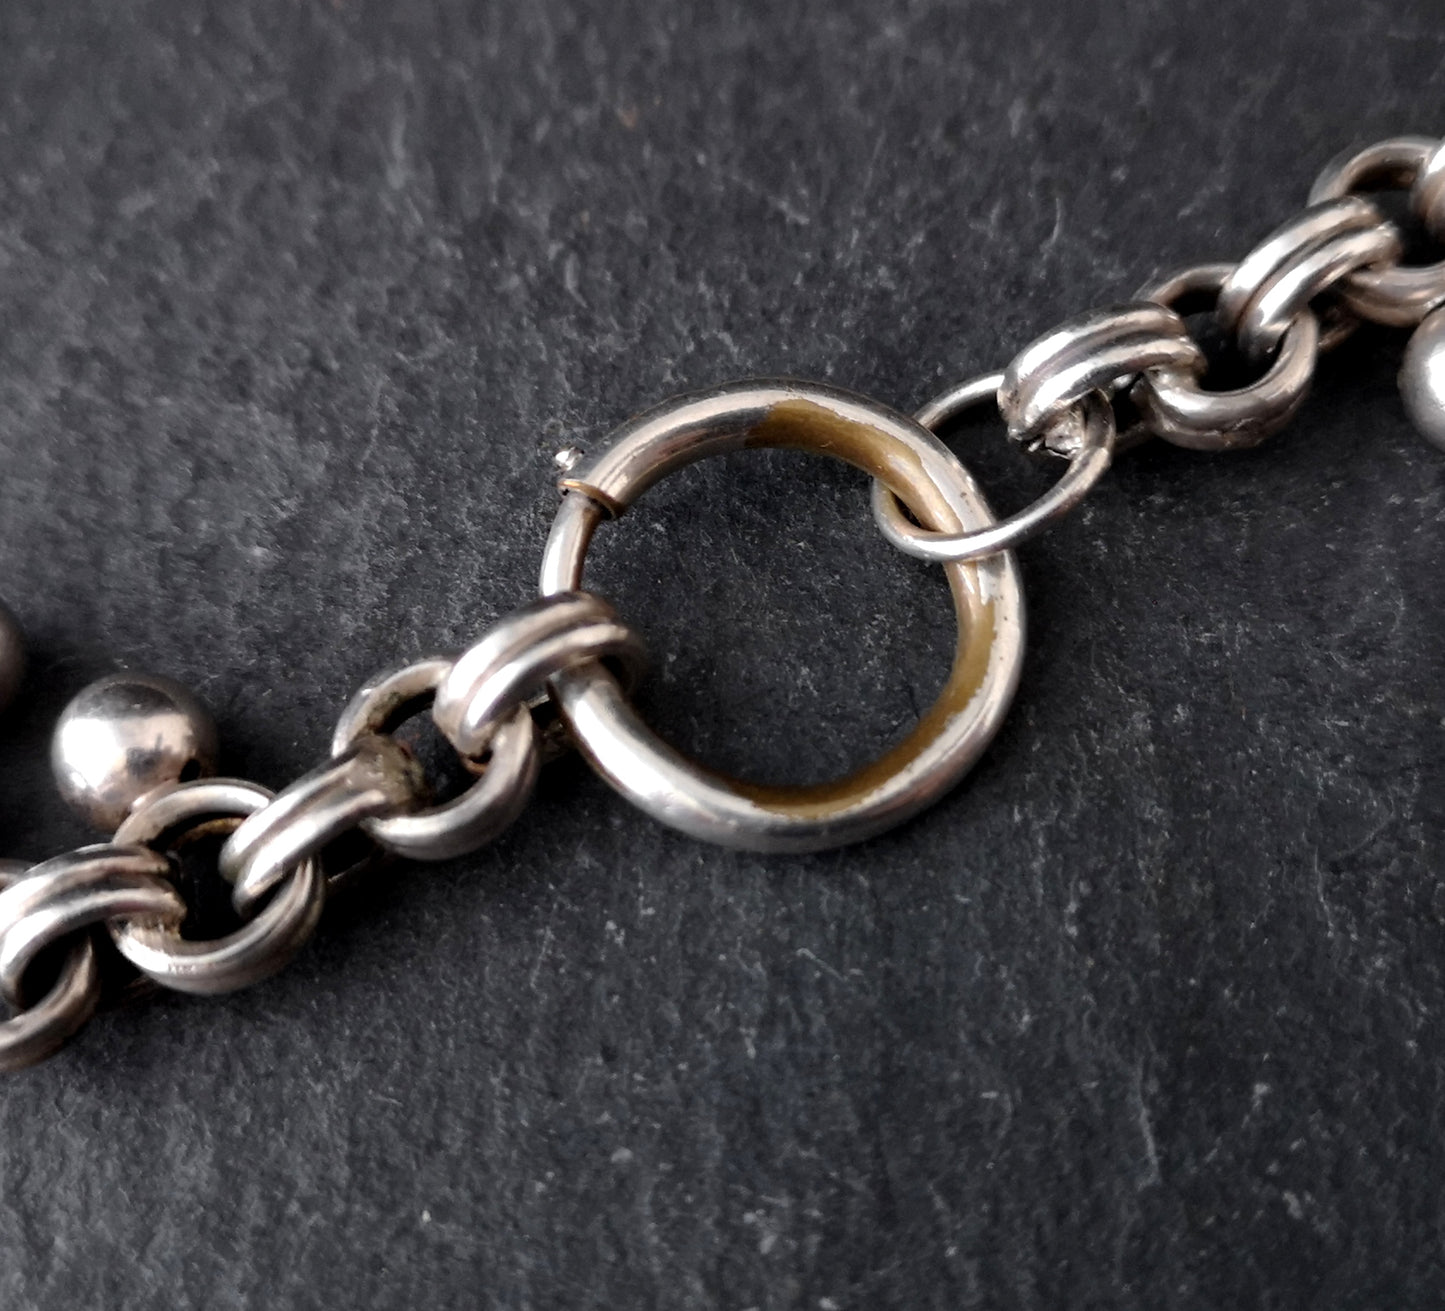 Antique Victorian silver book chain necklace